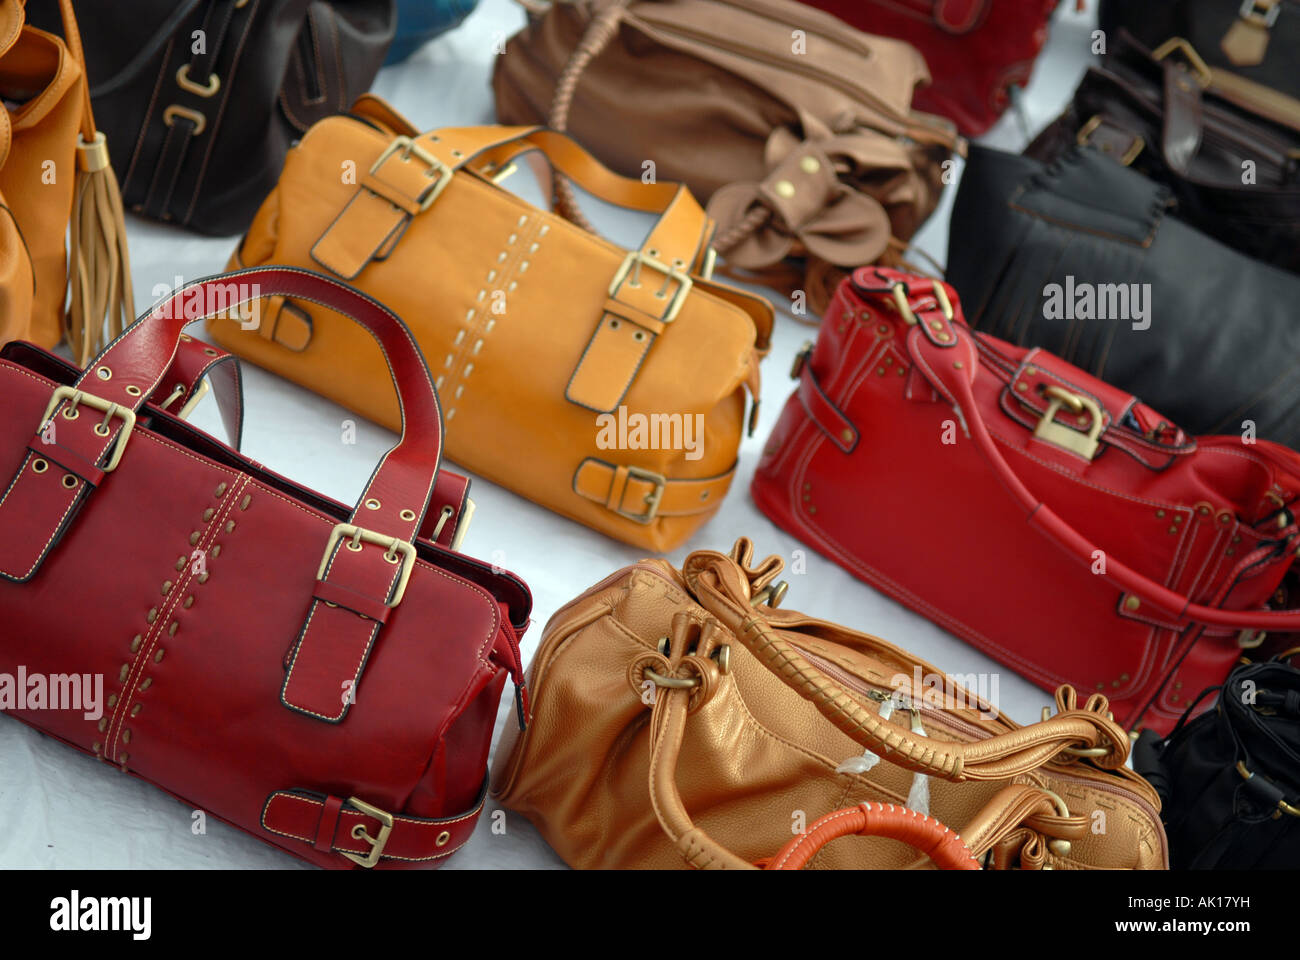 Fake designer handbags Stock Photo - Alamy